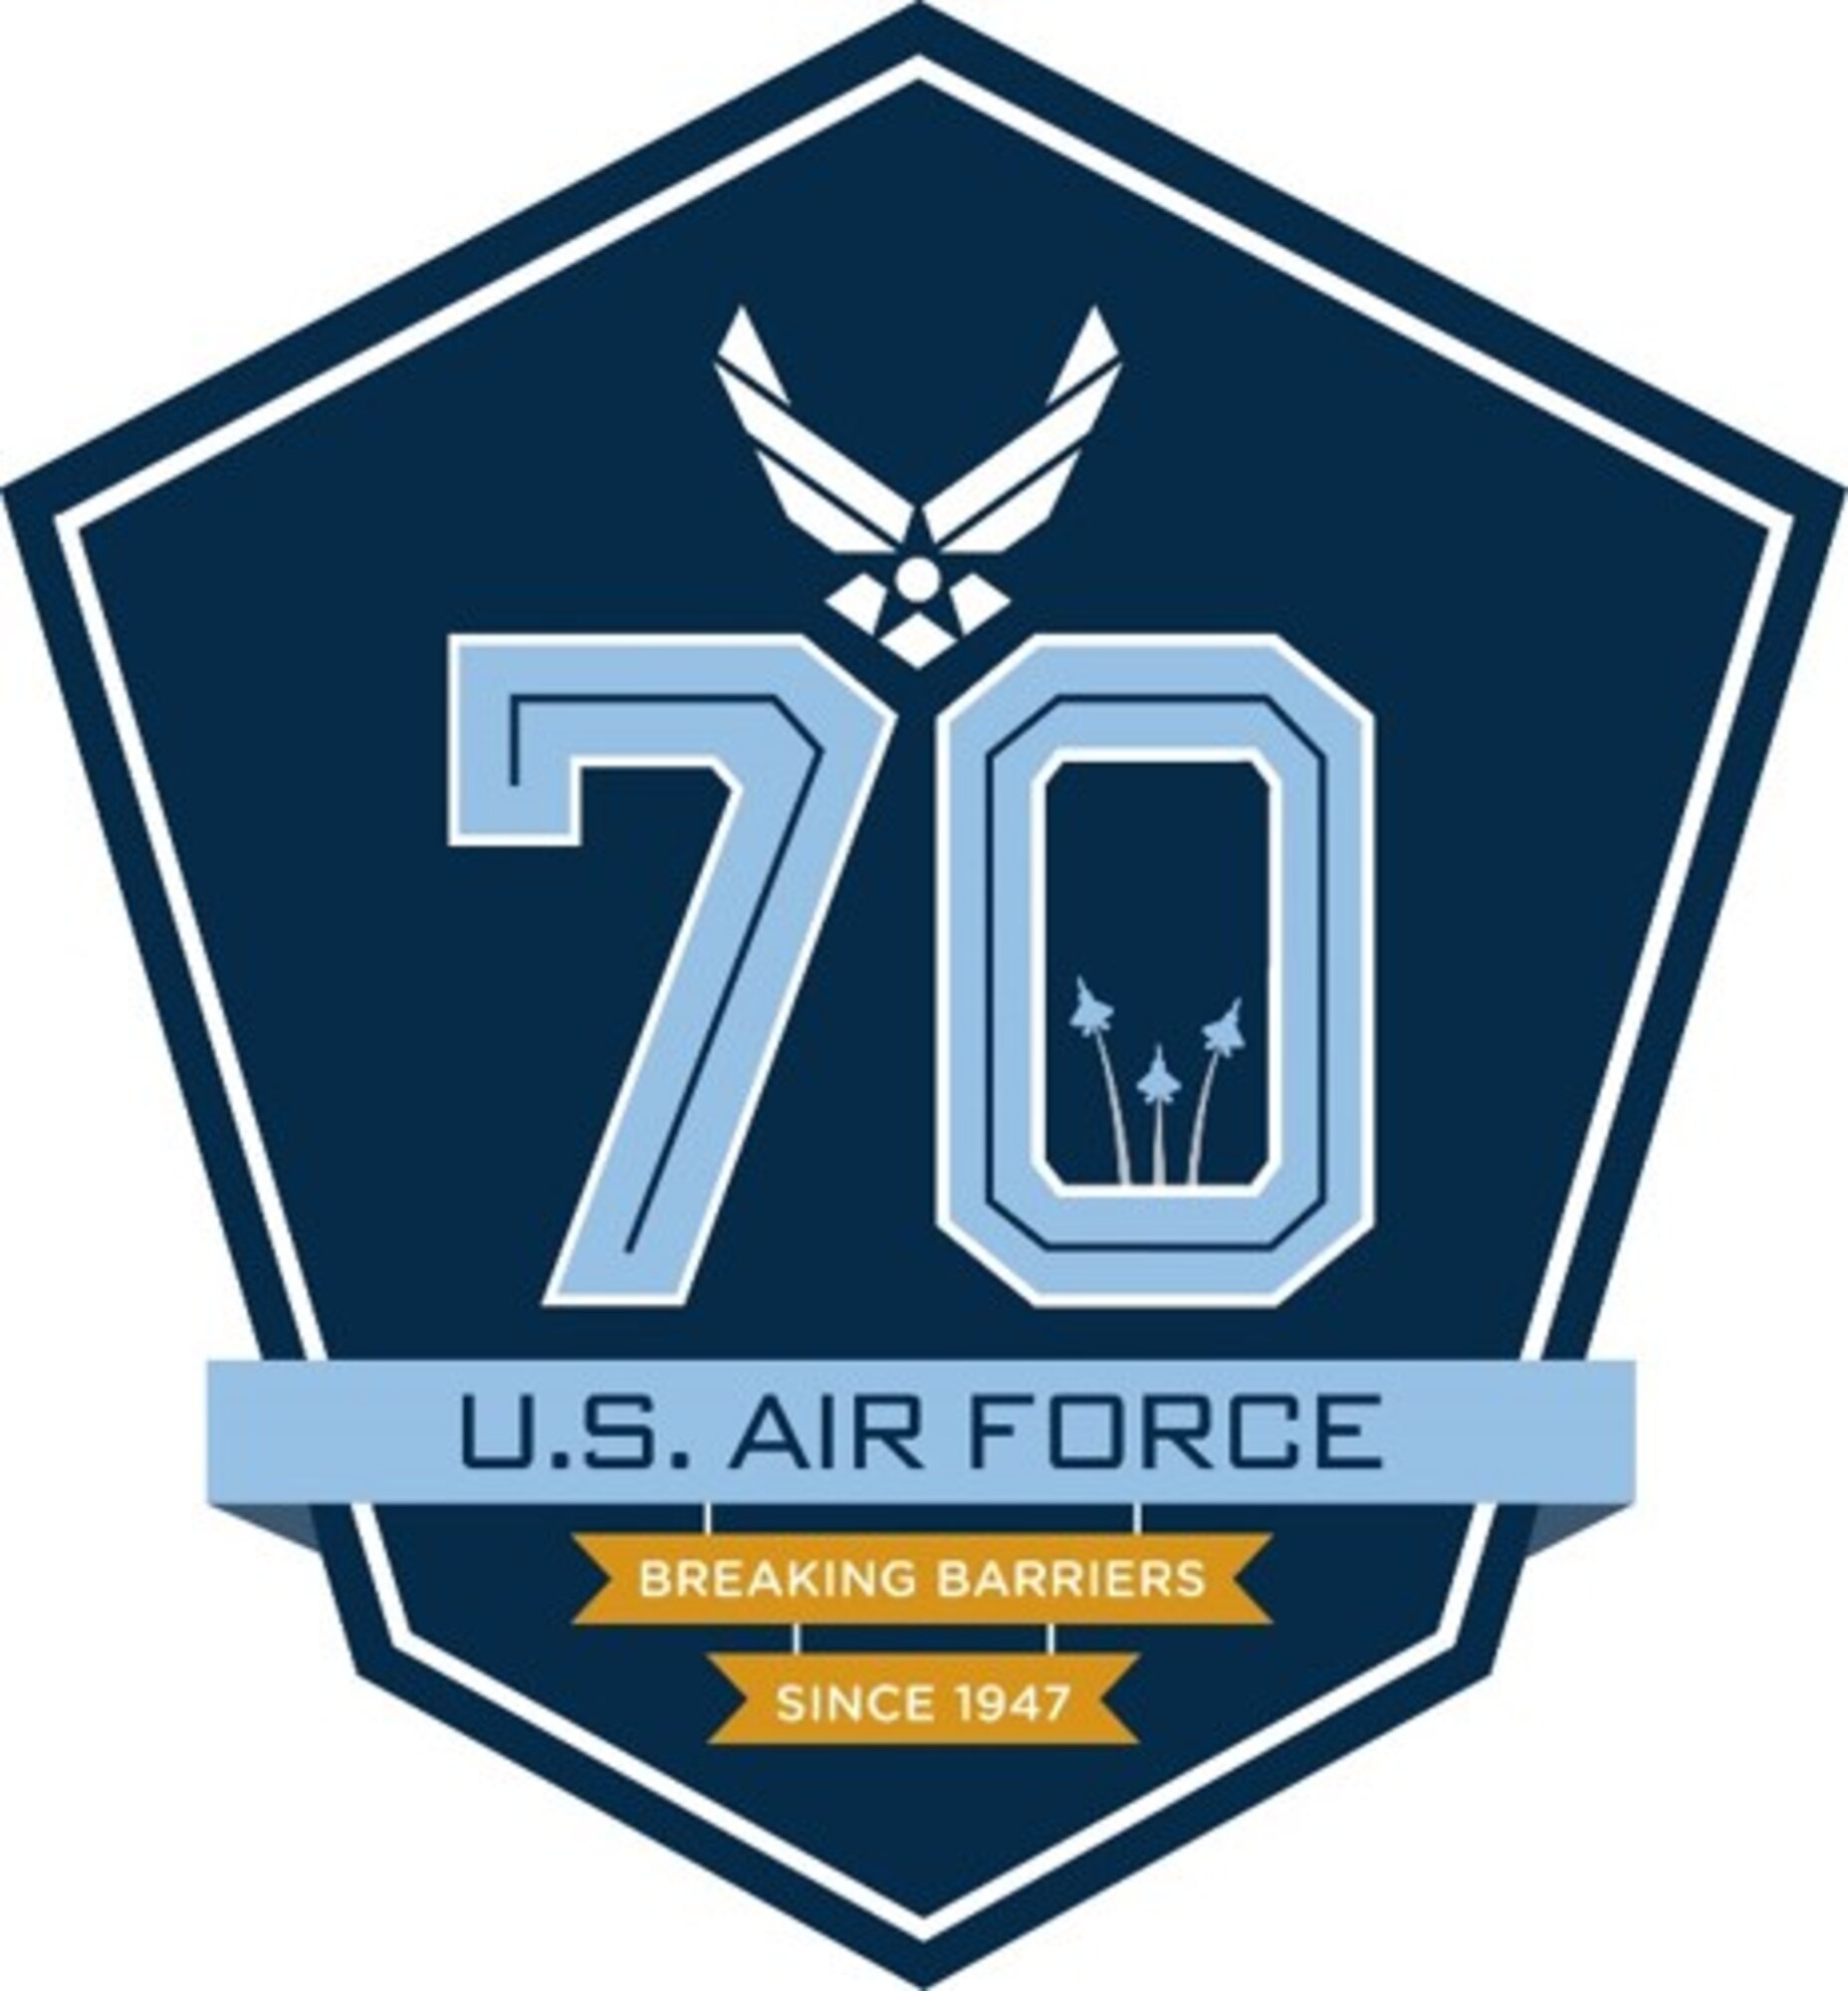 Air Force 70th anniversary logo. Air Force graphic